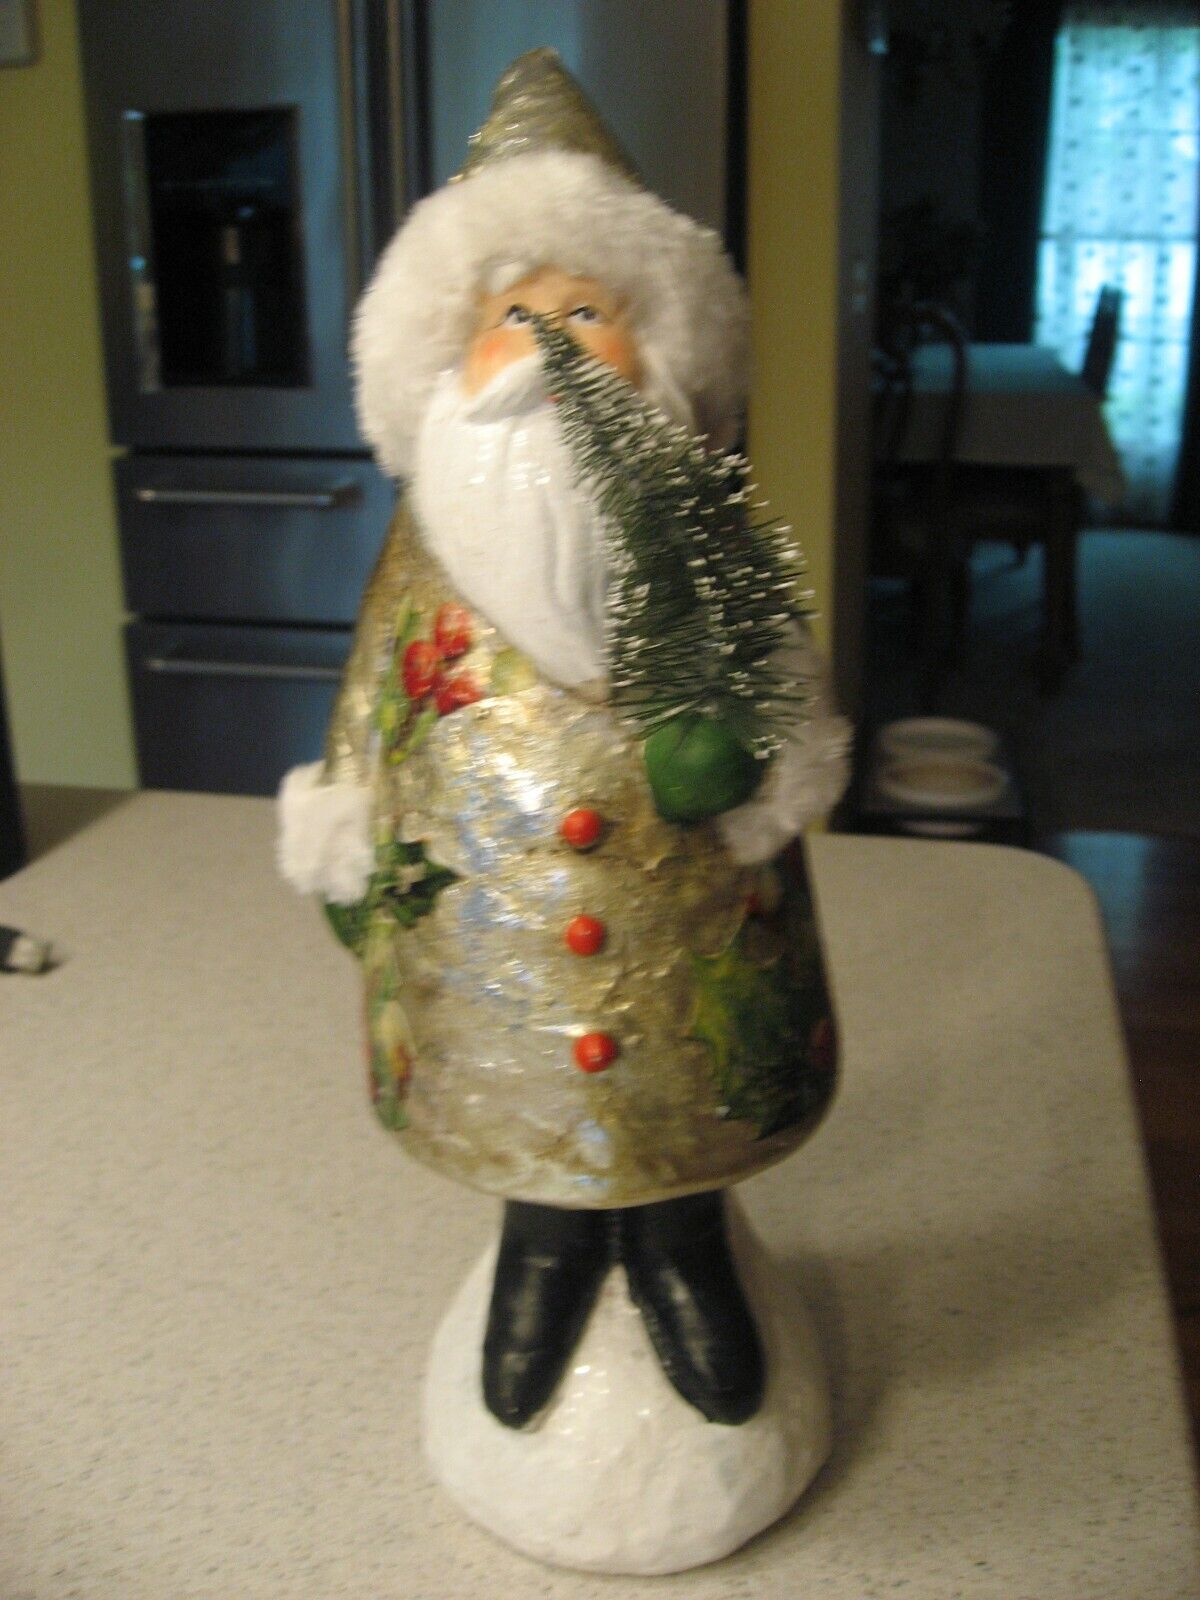 Vtg Ino Schaller Santa Claus with Tree Papier Mache Figurine -Hand Painted Holly